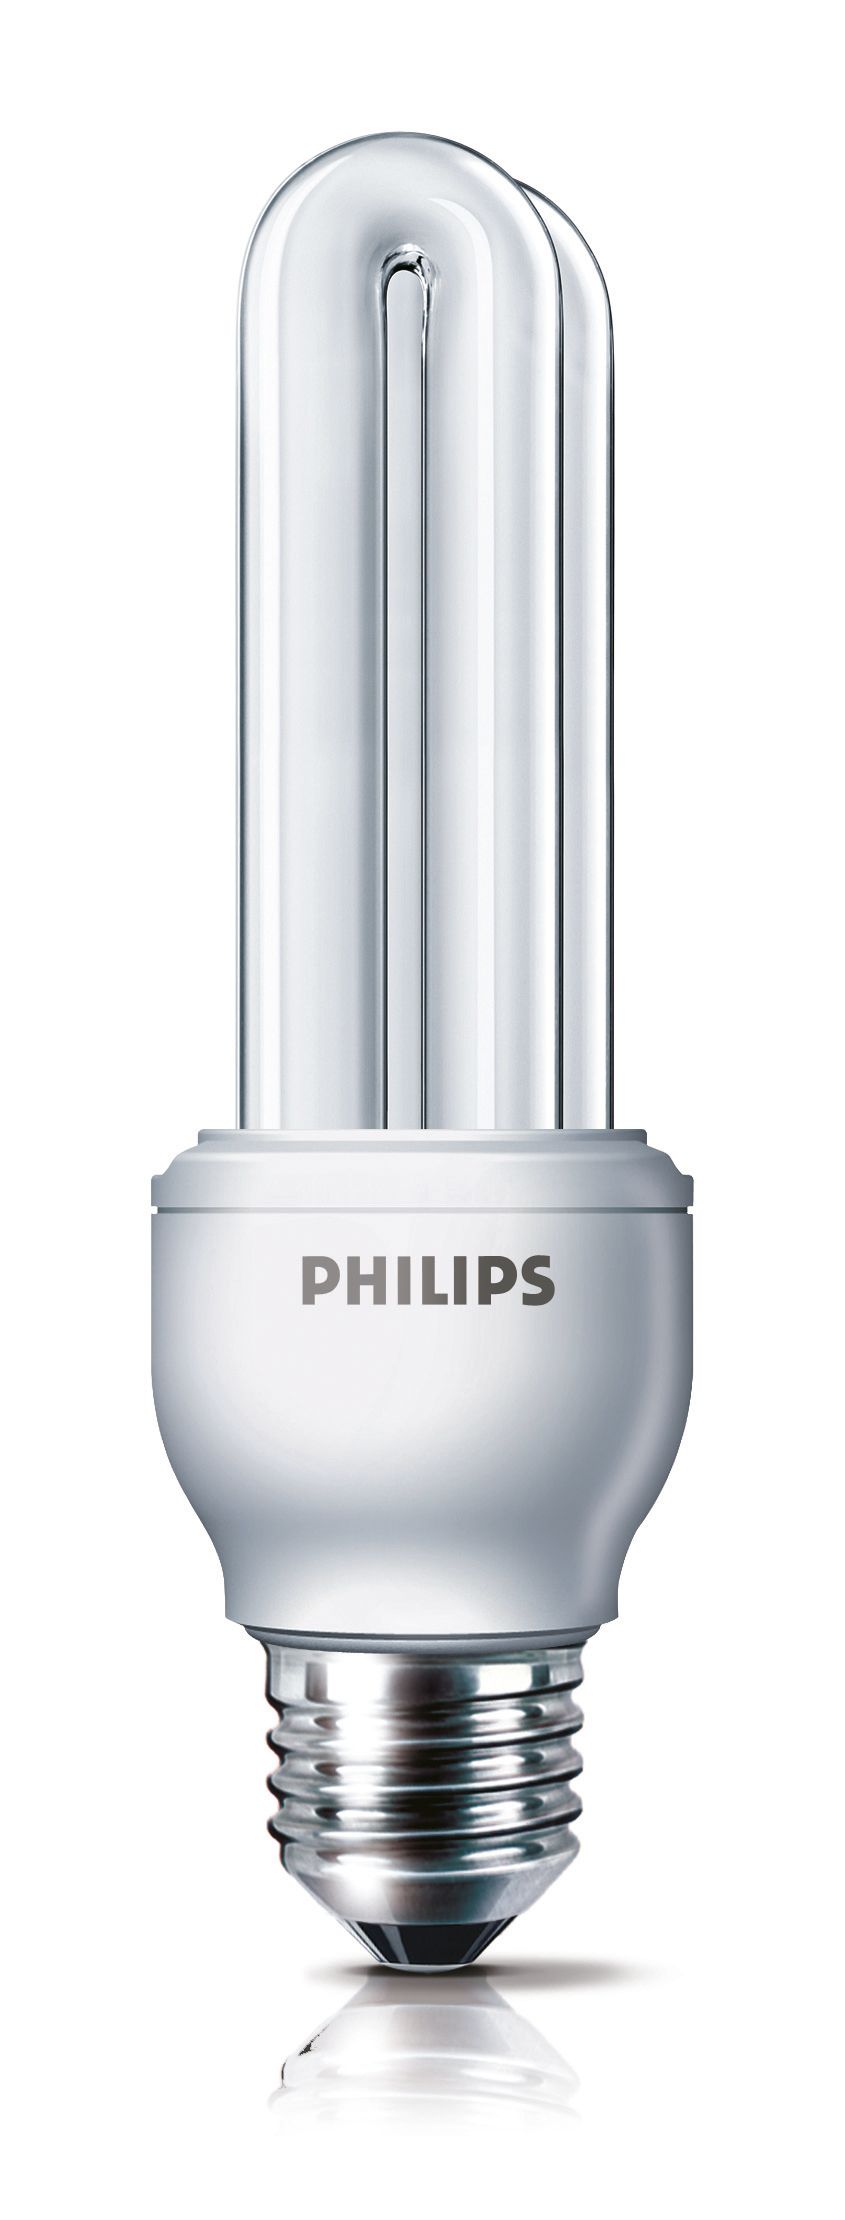 ESSENTIAL | CESSEN Philips lighting